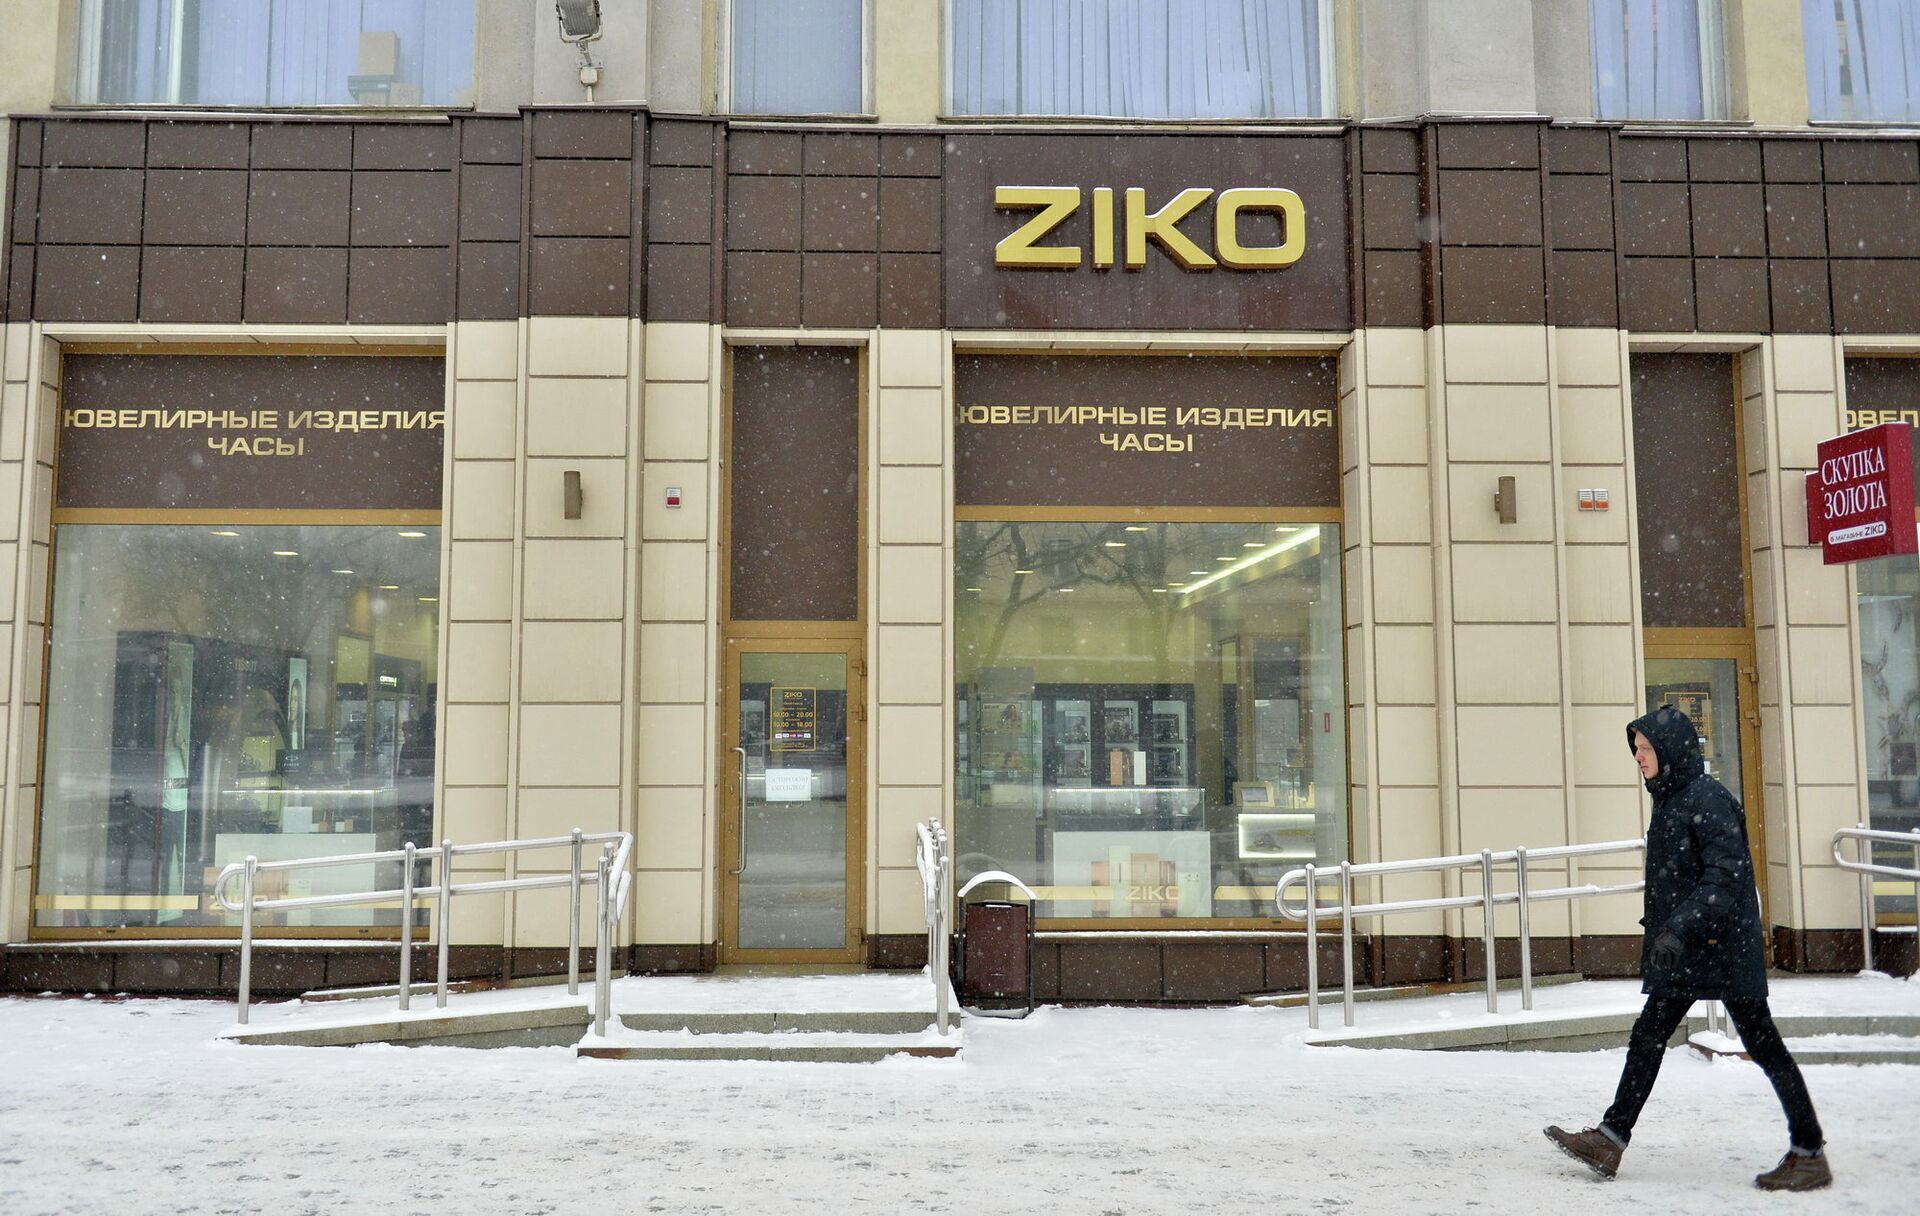 ZIKO объявила награду $2 тыс. за помощь в розыске преступника - 22.01.2015,Sputnik Беларусь